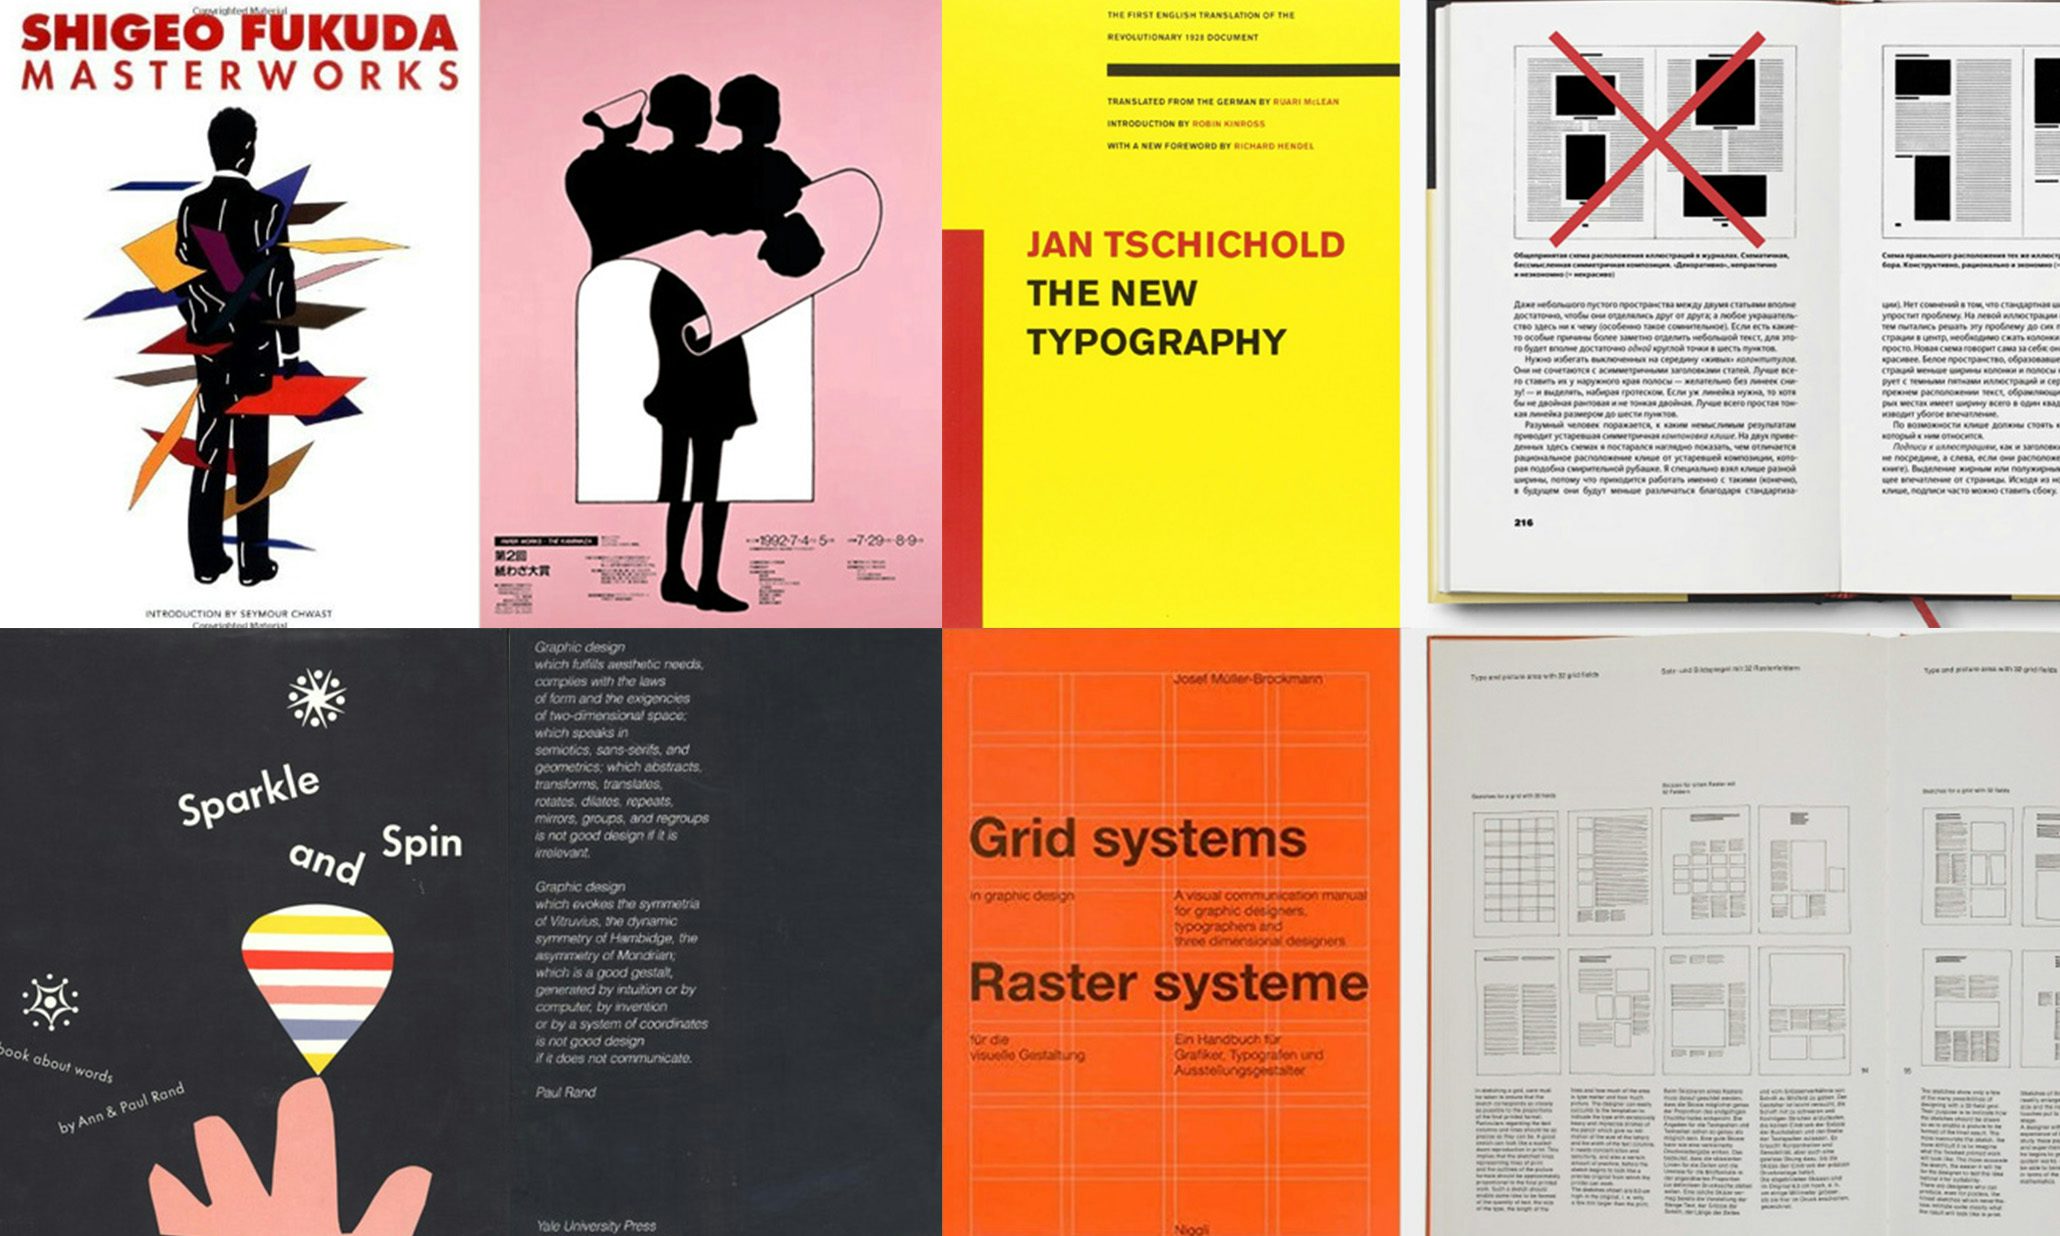 5 classic design books for summer reading - 99designs